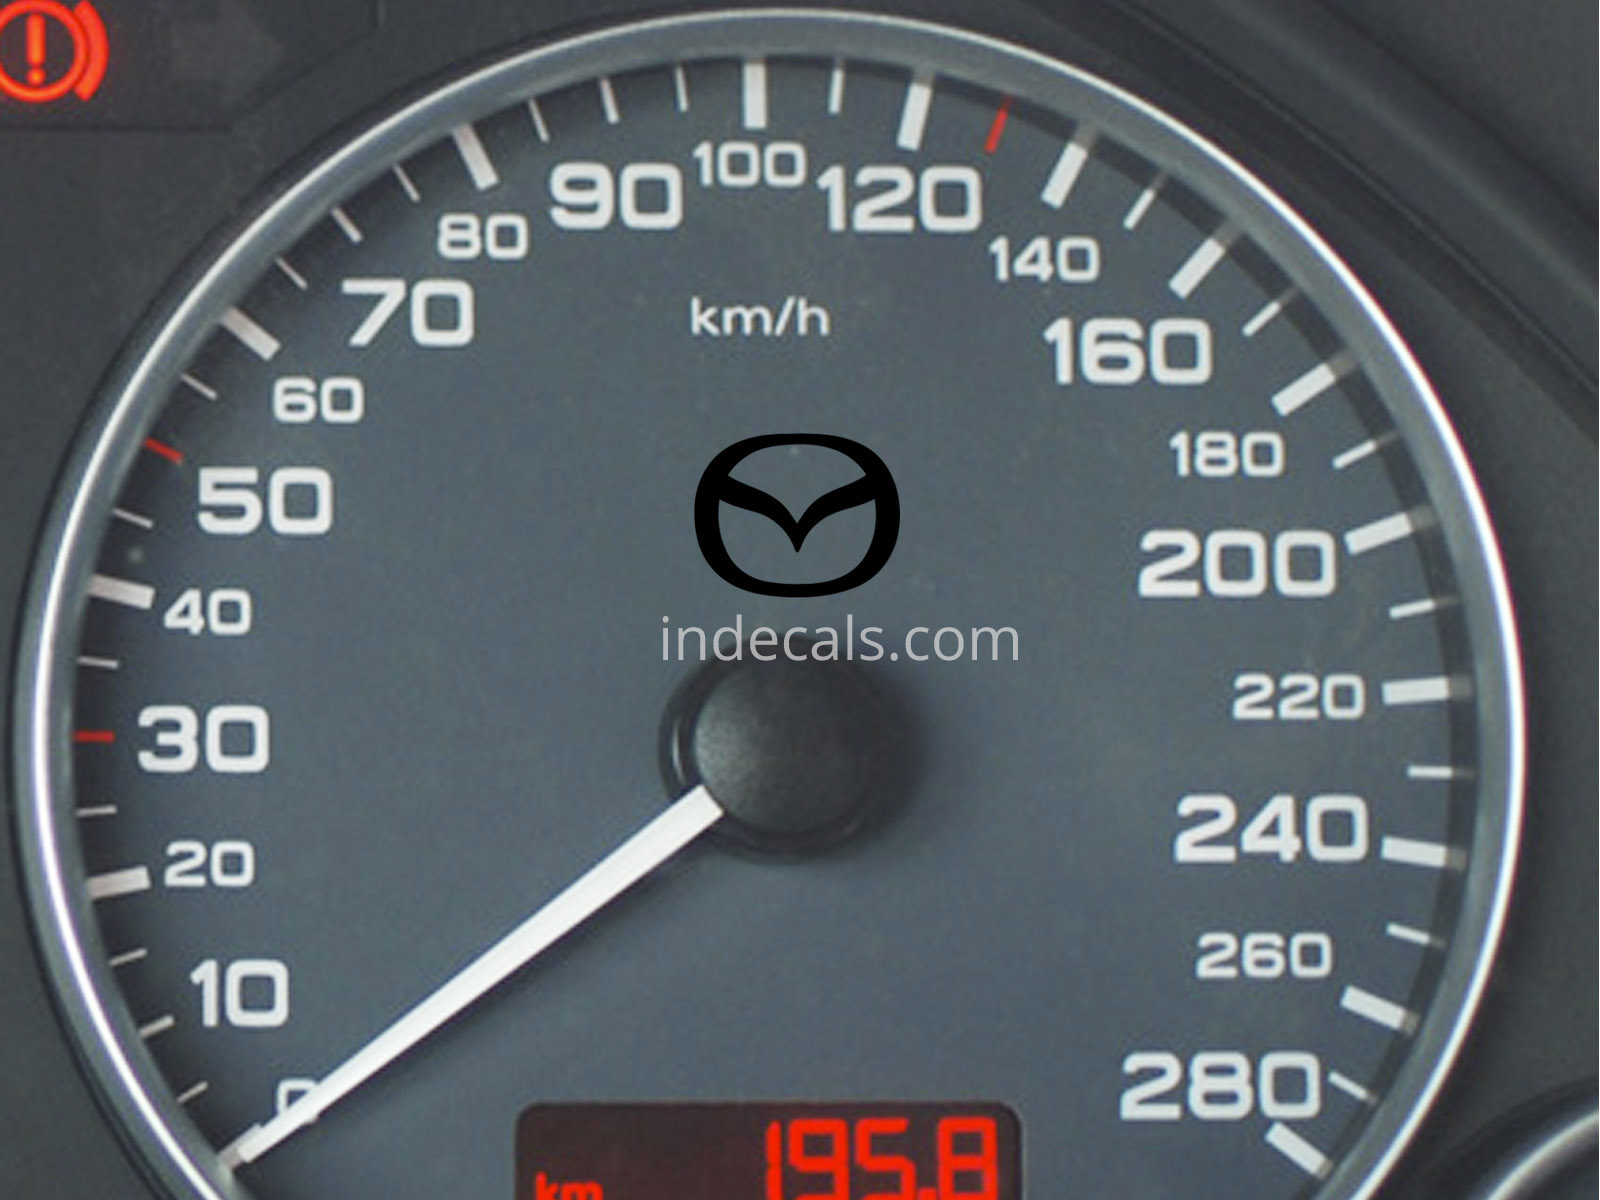 3 x Mazda Stickers for Speedometer - Black